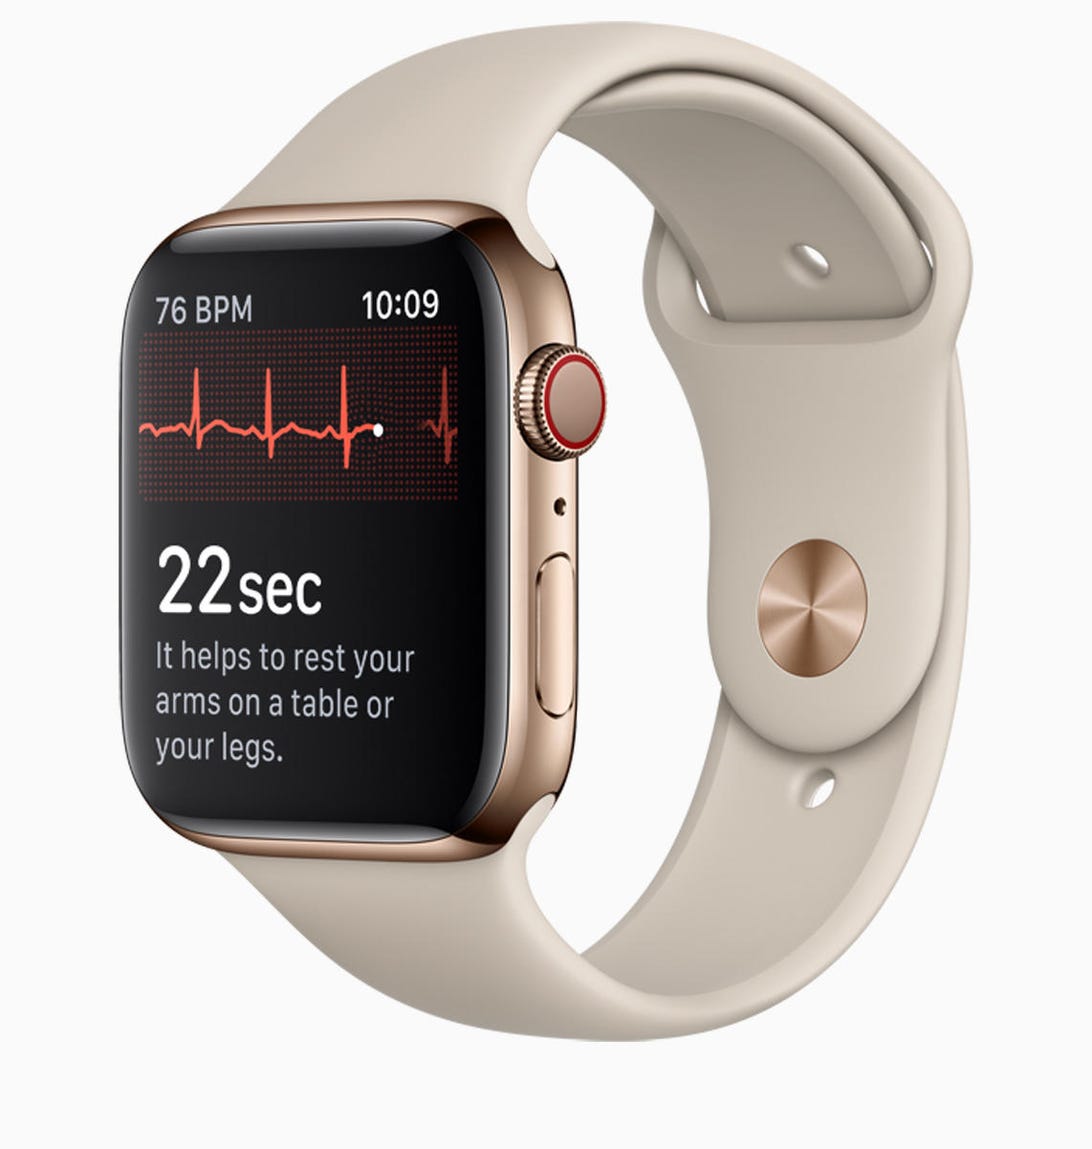 Johnson and Johnson, Apple team up on new iOS-based heart study